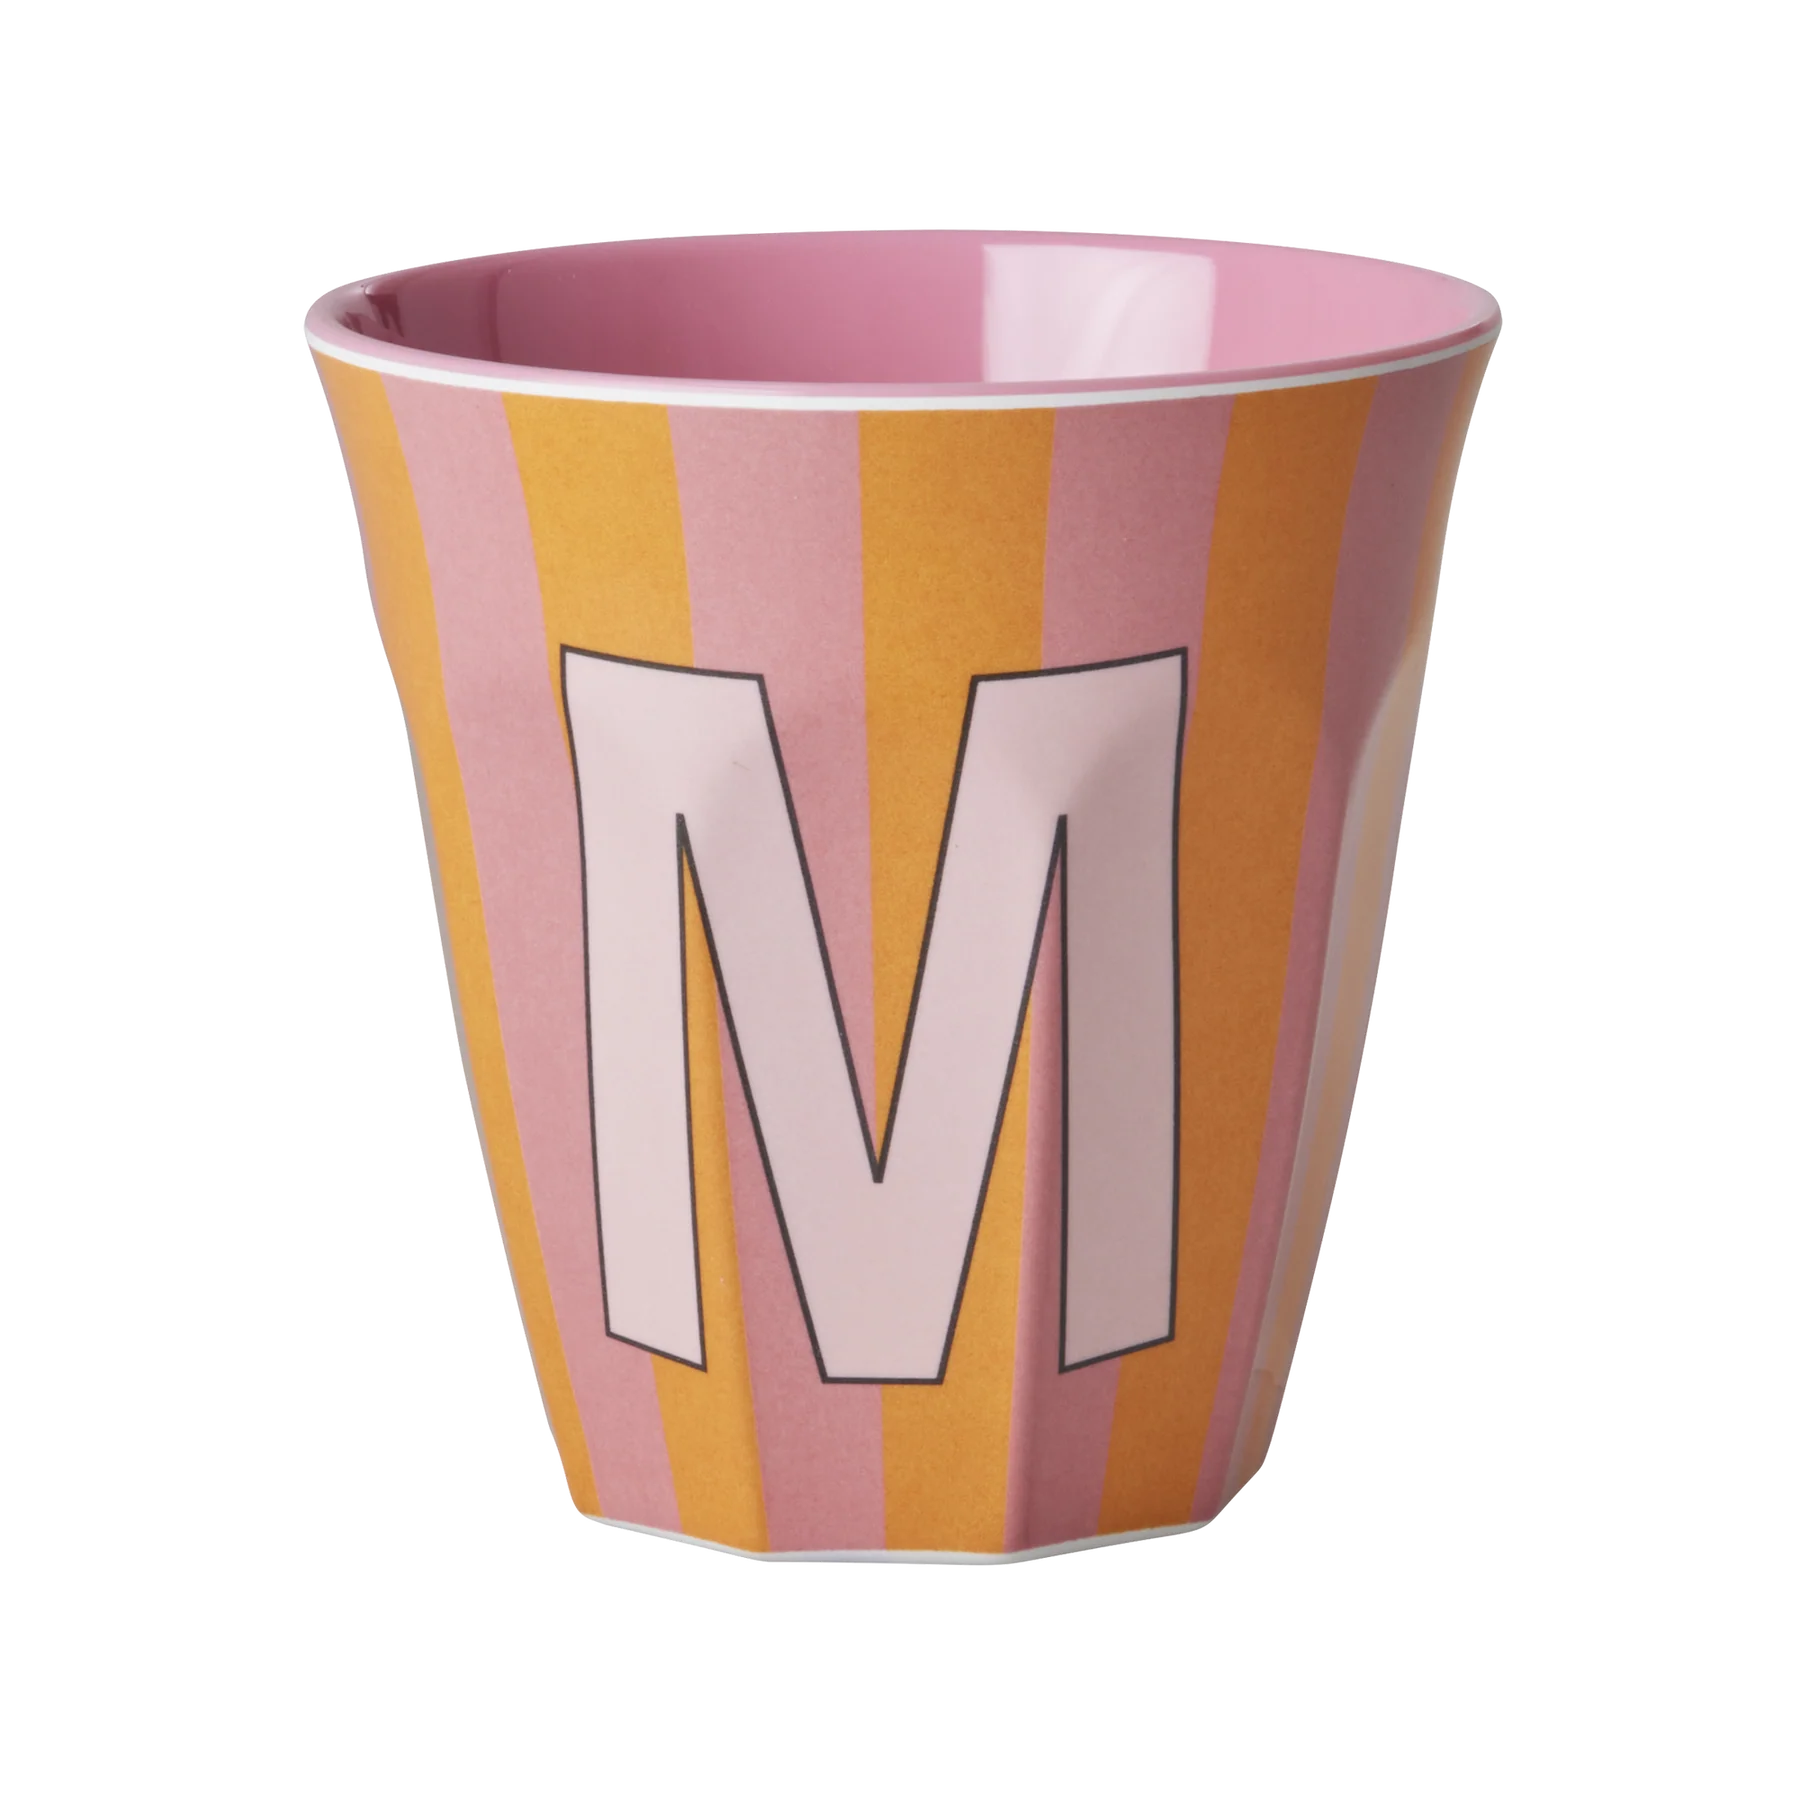 M Pink Stripe Melamine Cup - Rice DK